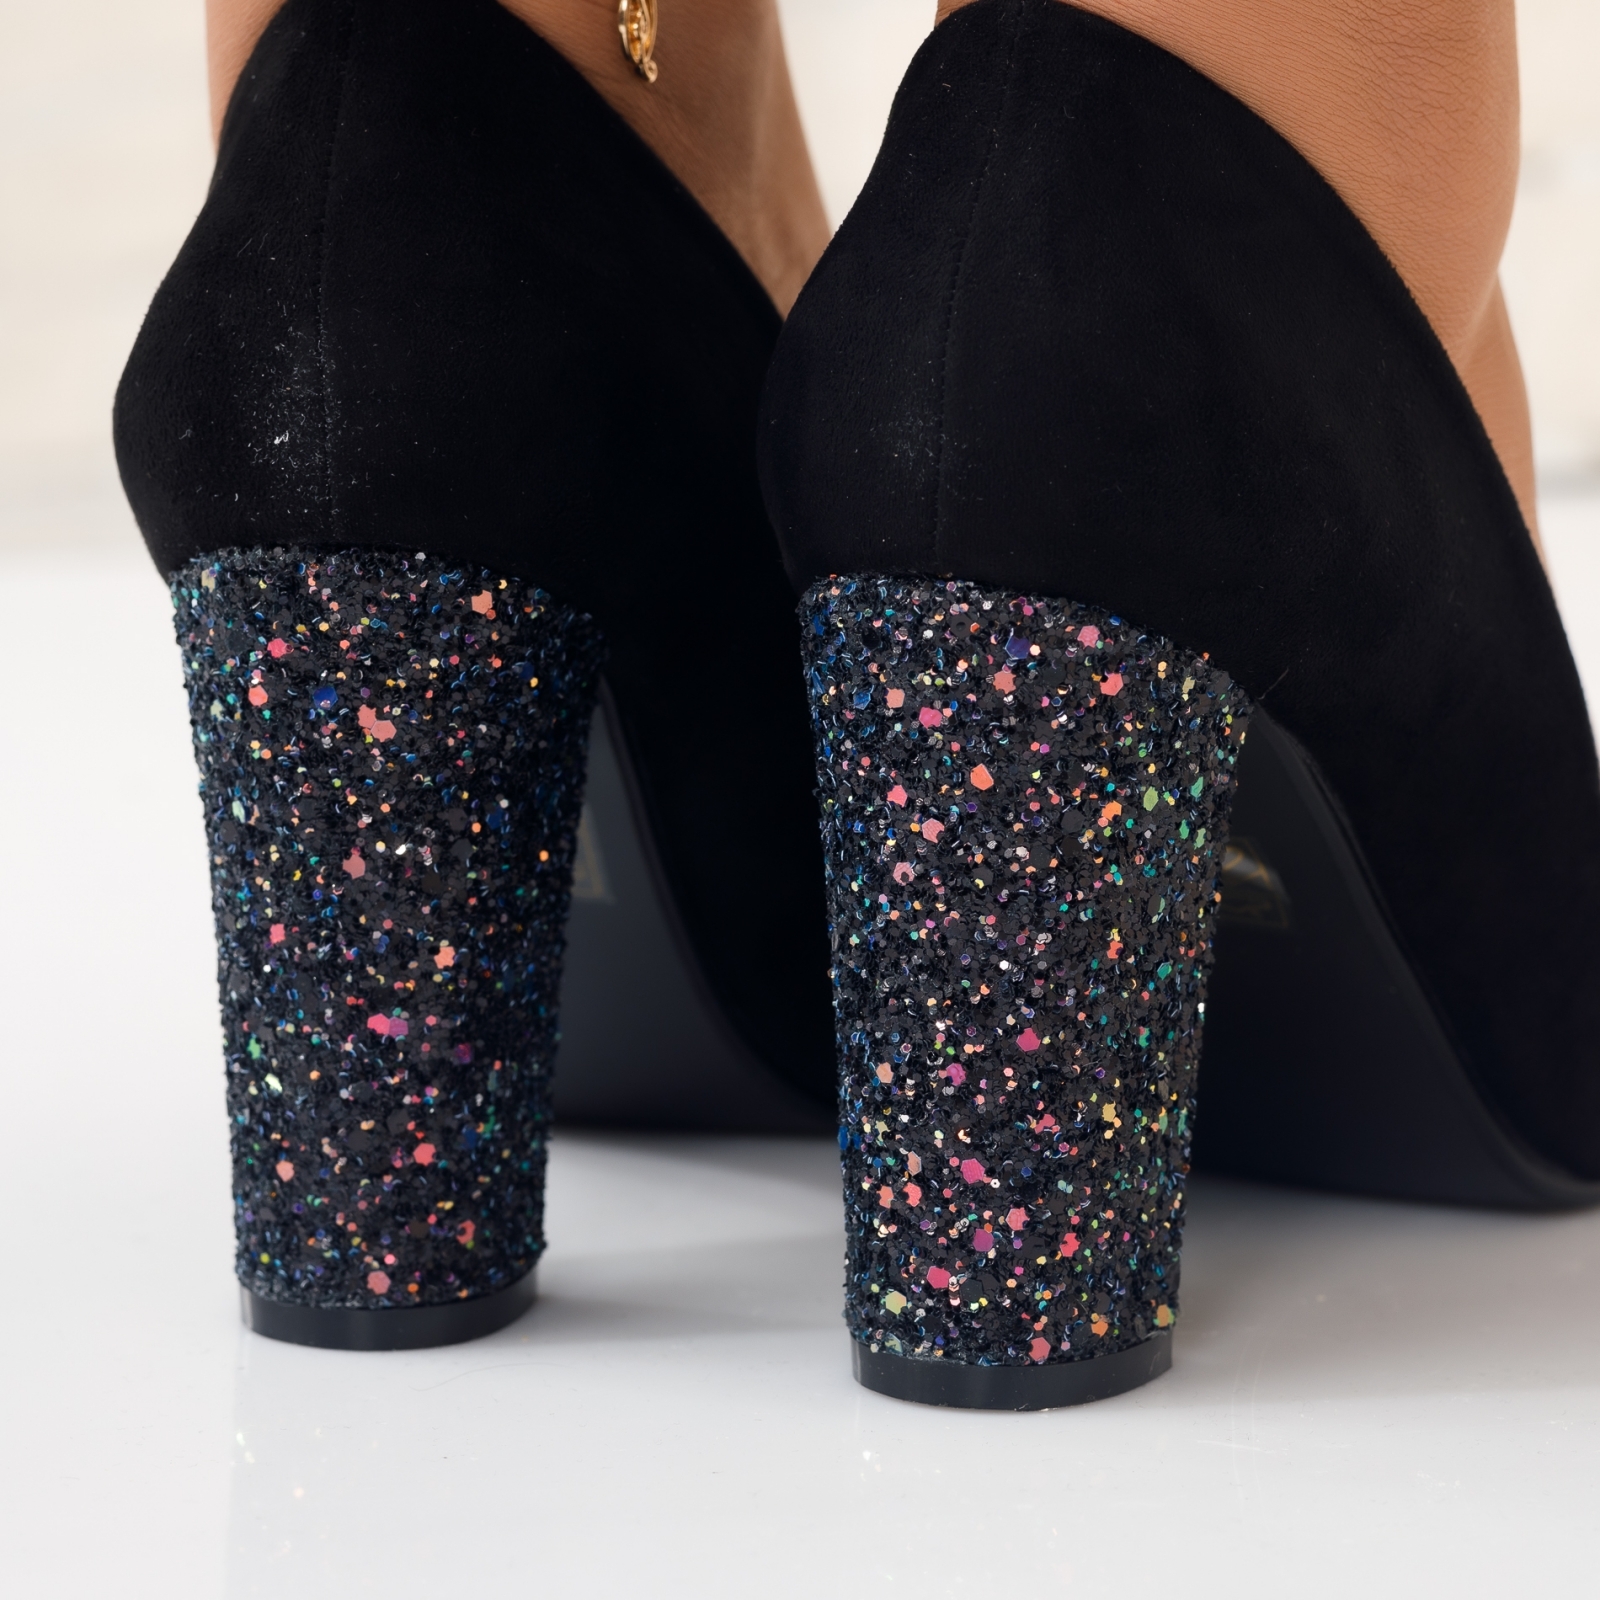 Pantofi Dama cu Toc Katherine Negri2 #3924M